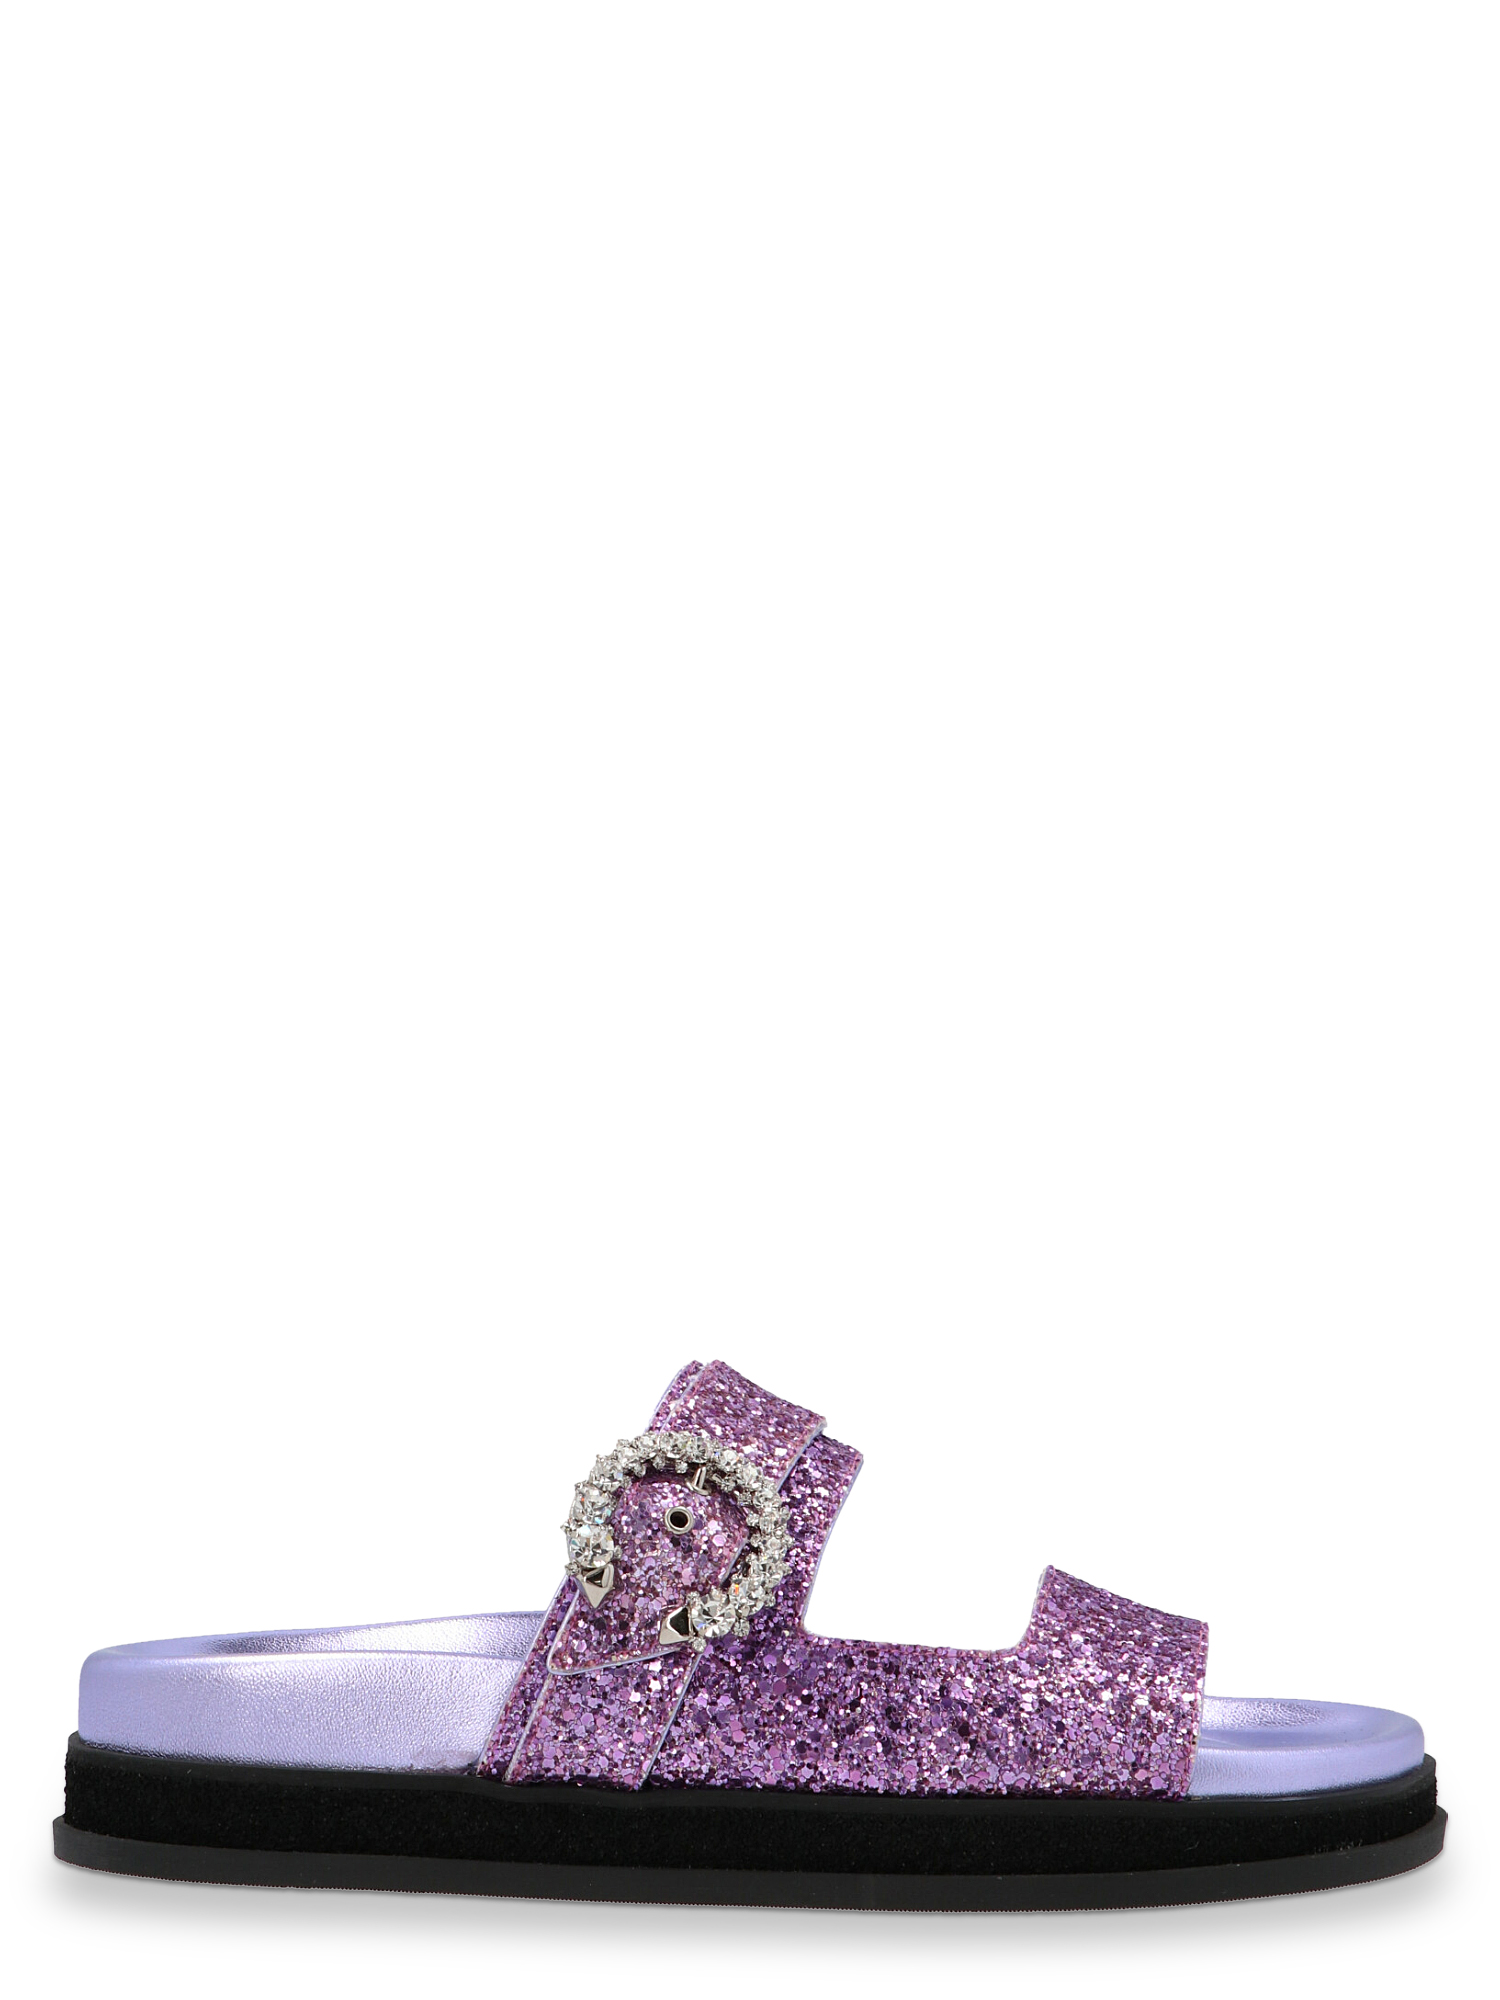 Sandales Pour Femme - Jimmy Choo - En Leather Purple - Taille: IT 36 - EU 36